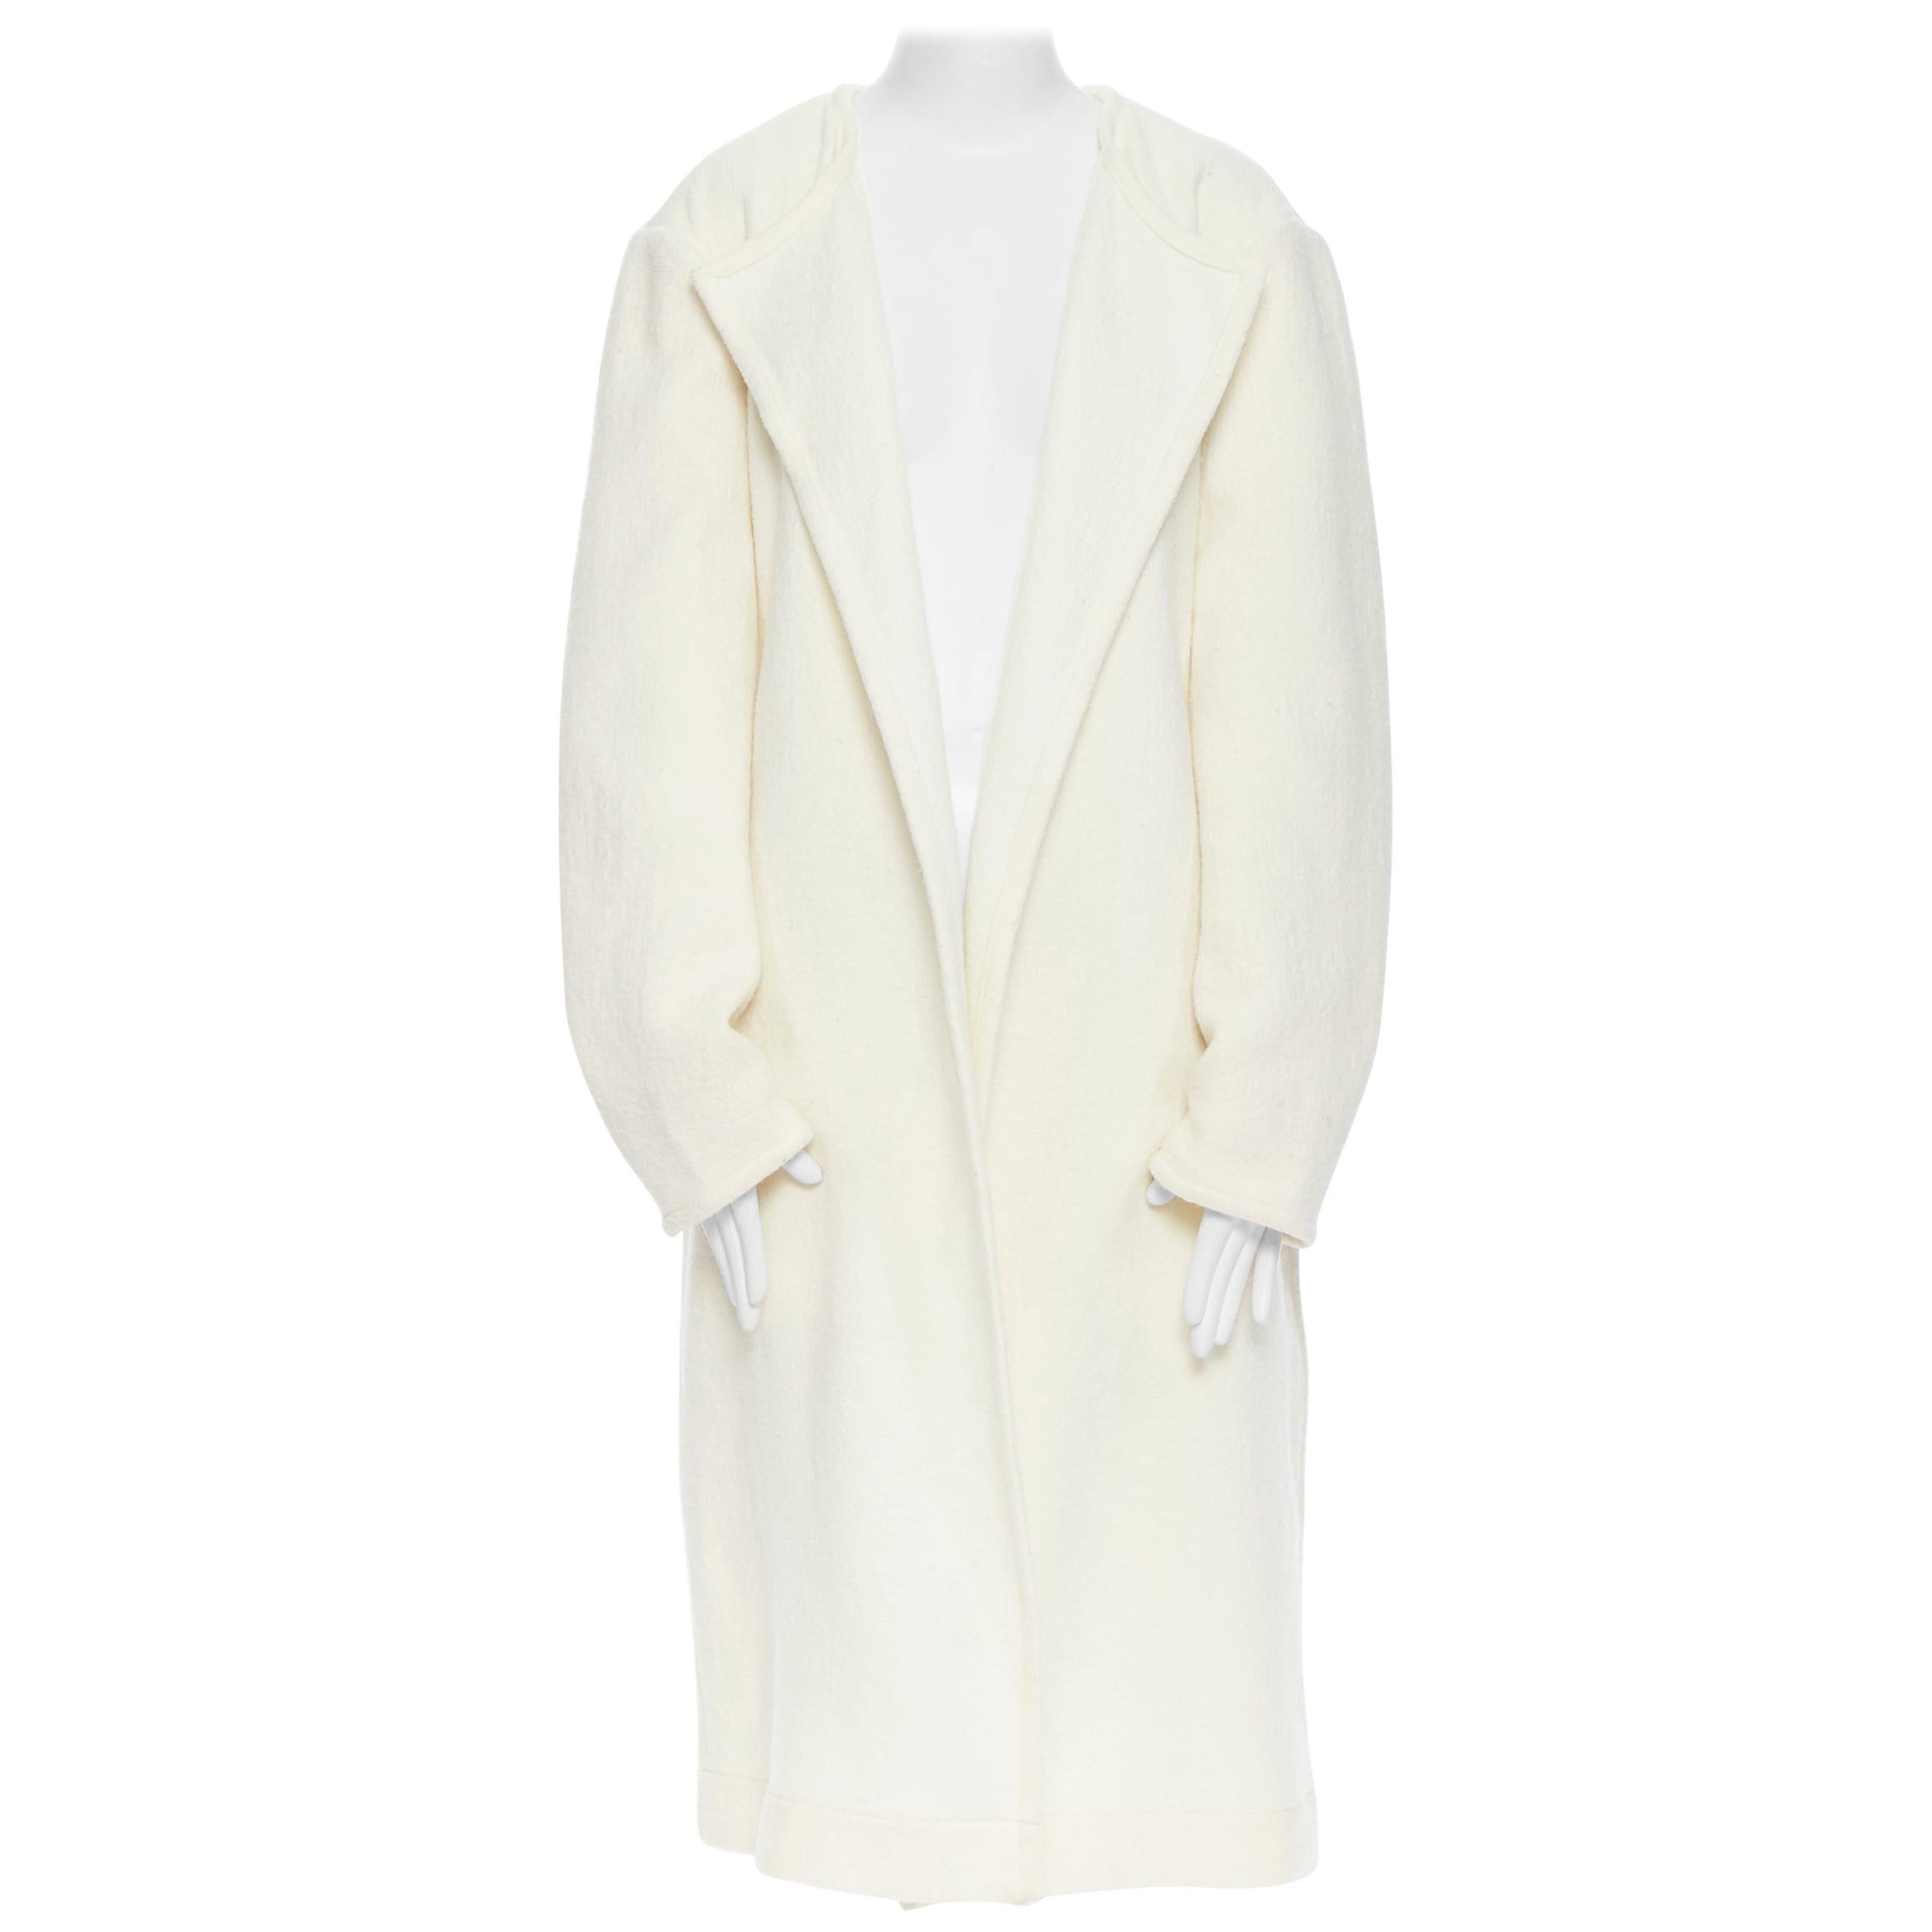 CELINE PHOEBE PHILO cream white 100% boiled wool minimalist cocoon coat FR38 M